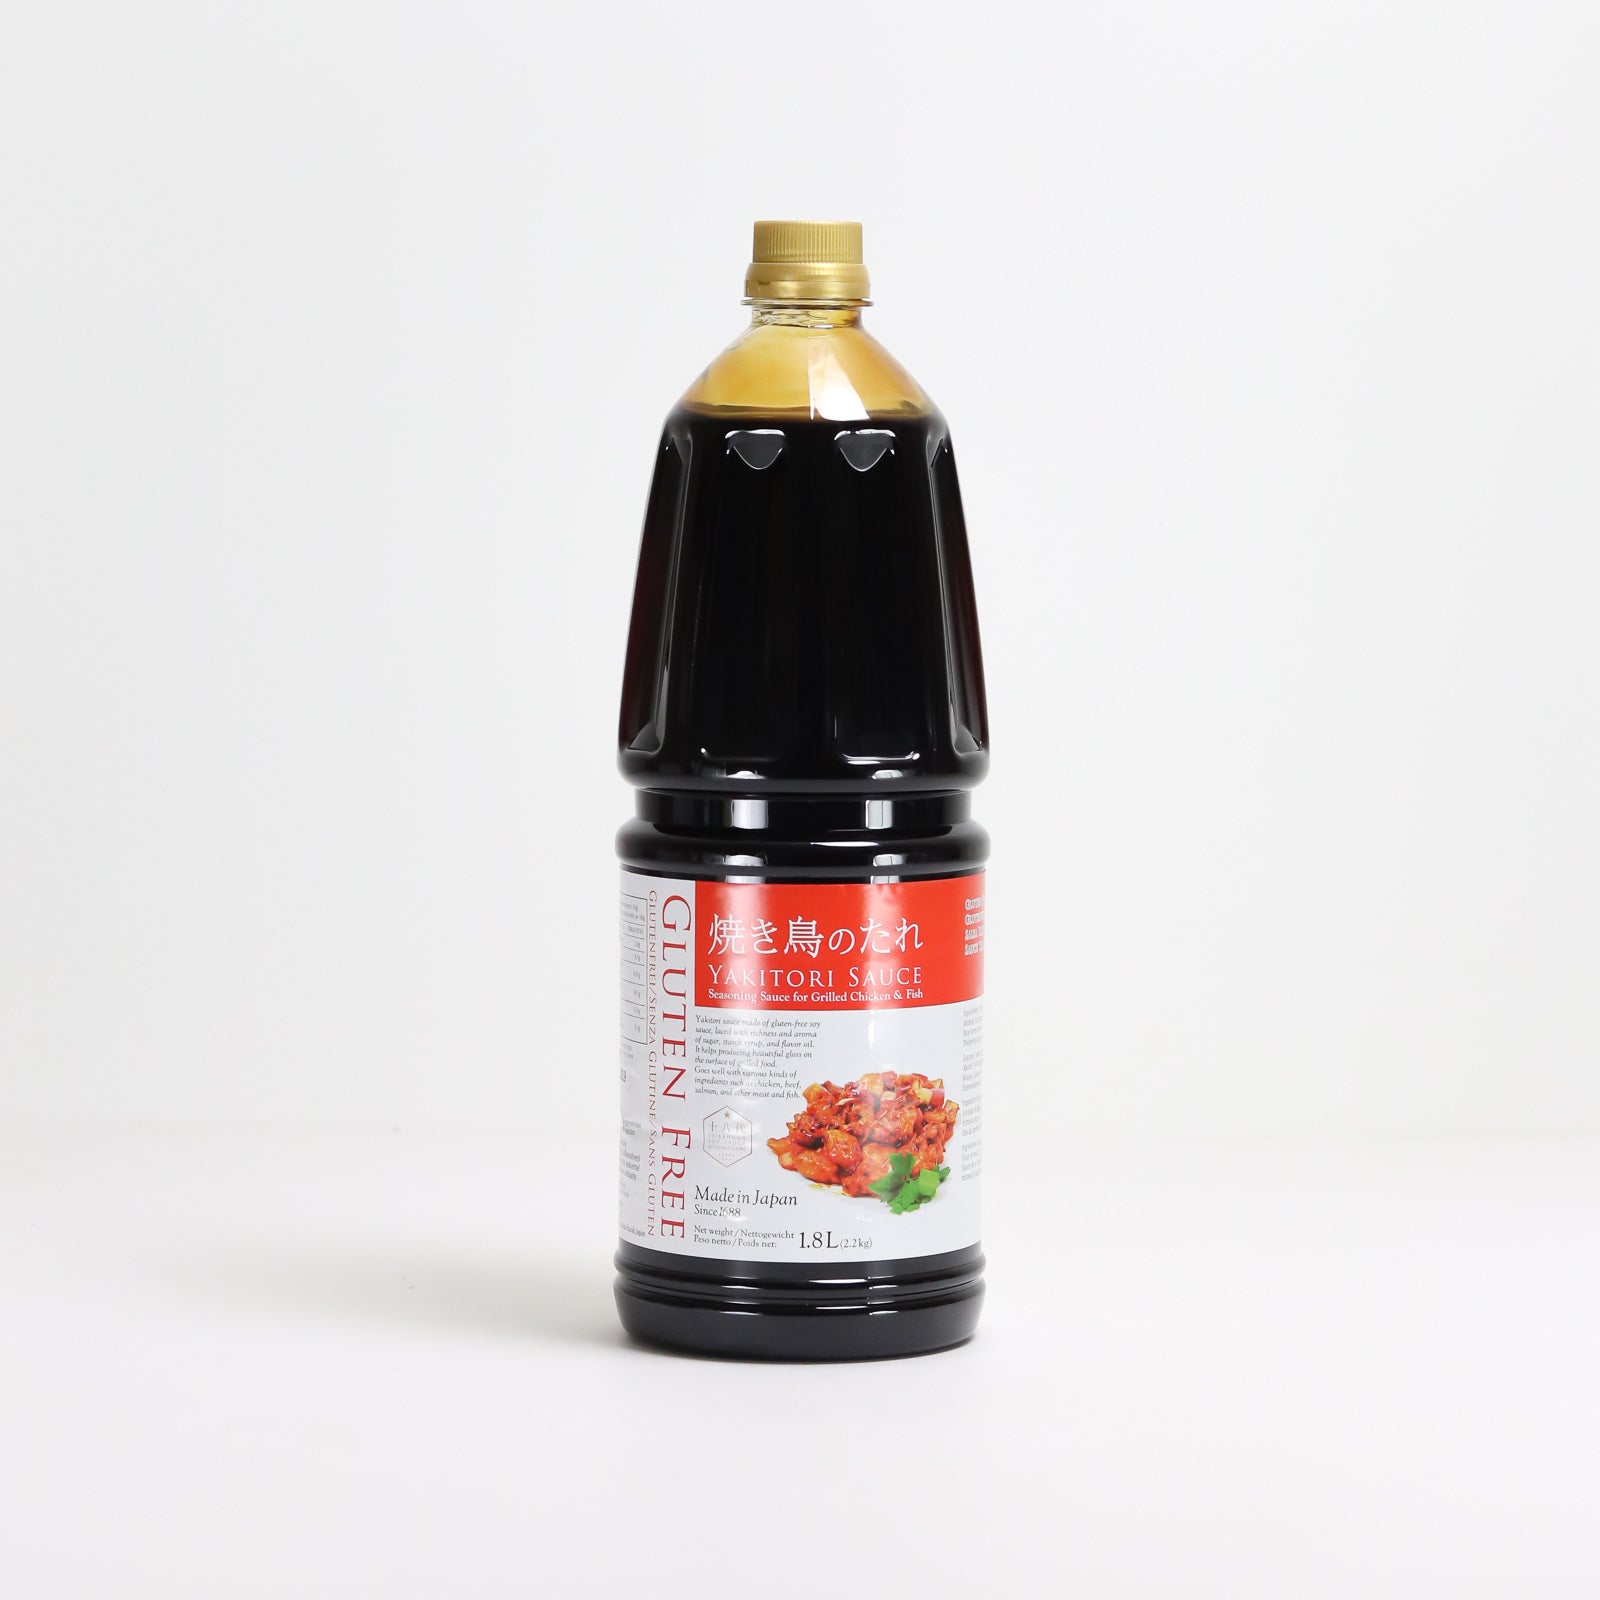 Sauce Yakitori 750ml - Solucious